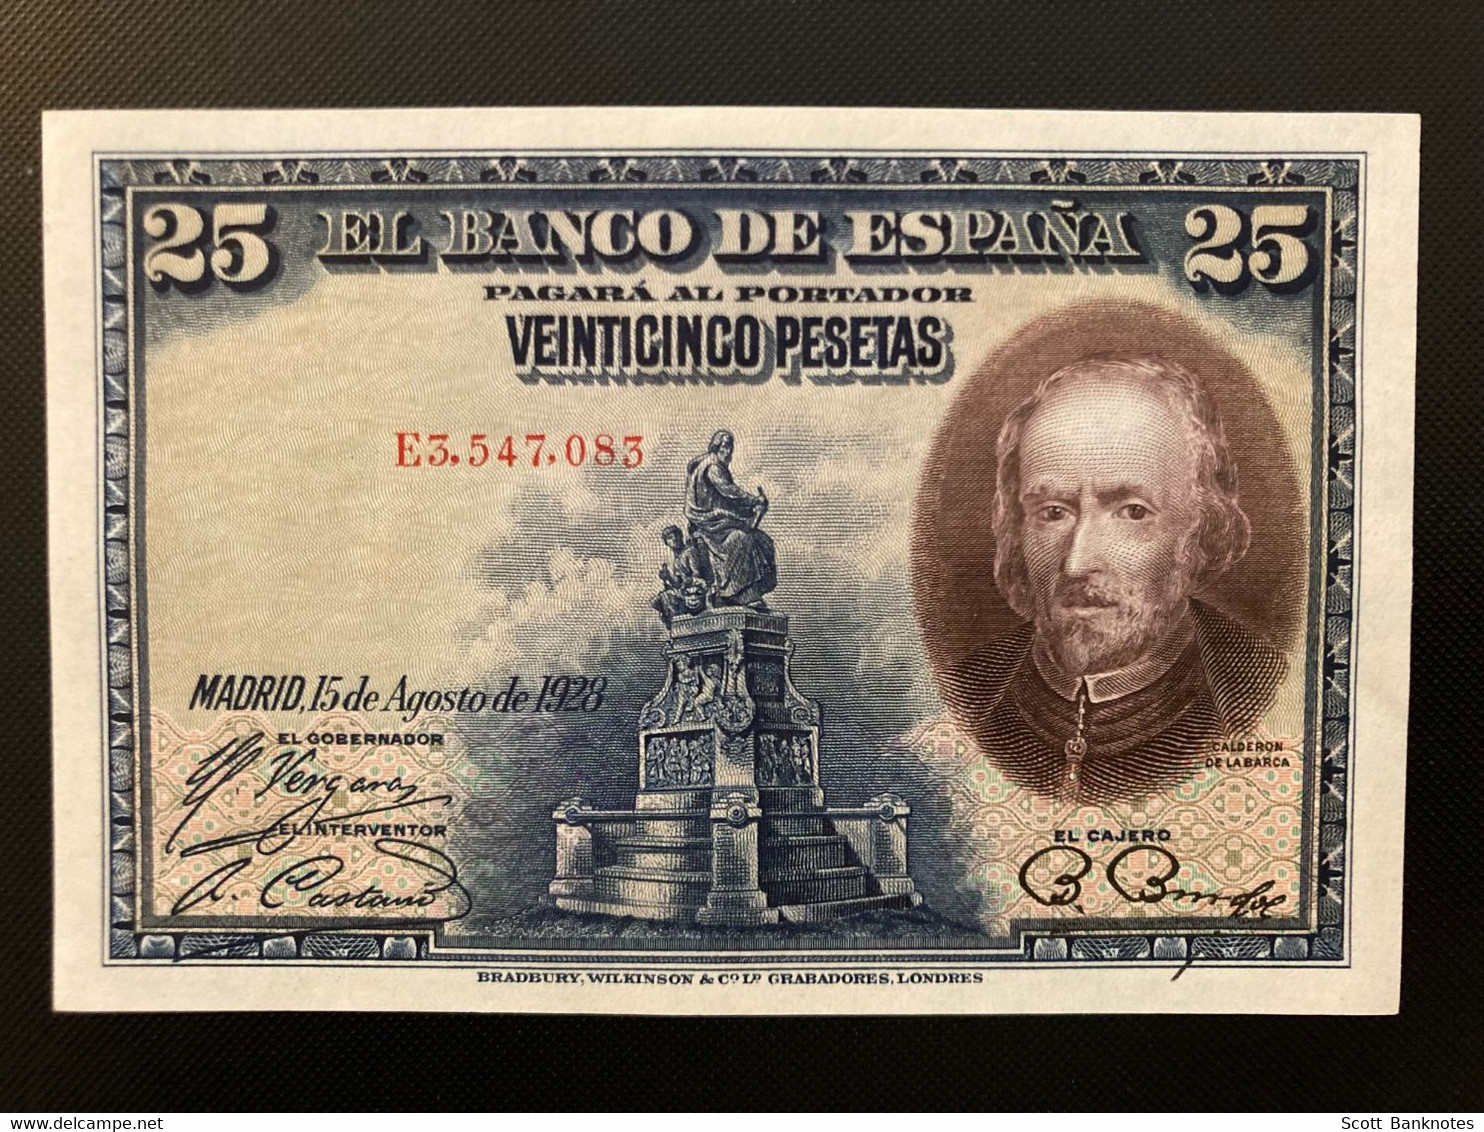 5 x EL BANCO DE ESPANA Banknotes, Madrid 15th August 1928, 1000, 500, 100, 50 and 25 Pesetas.